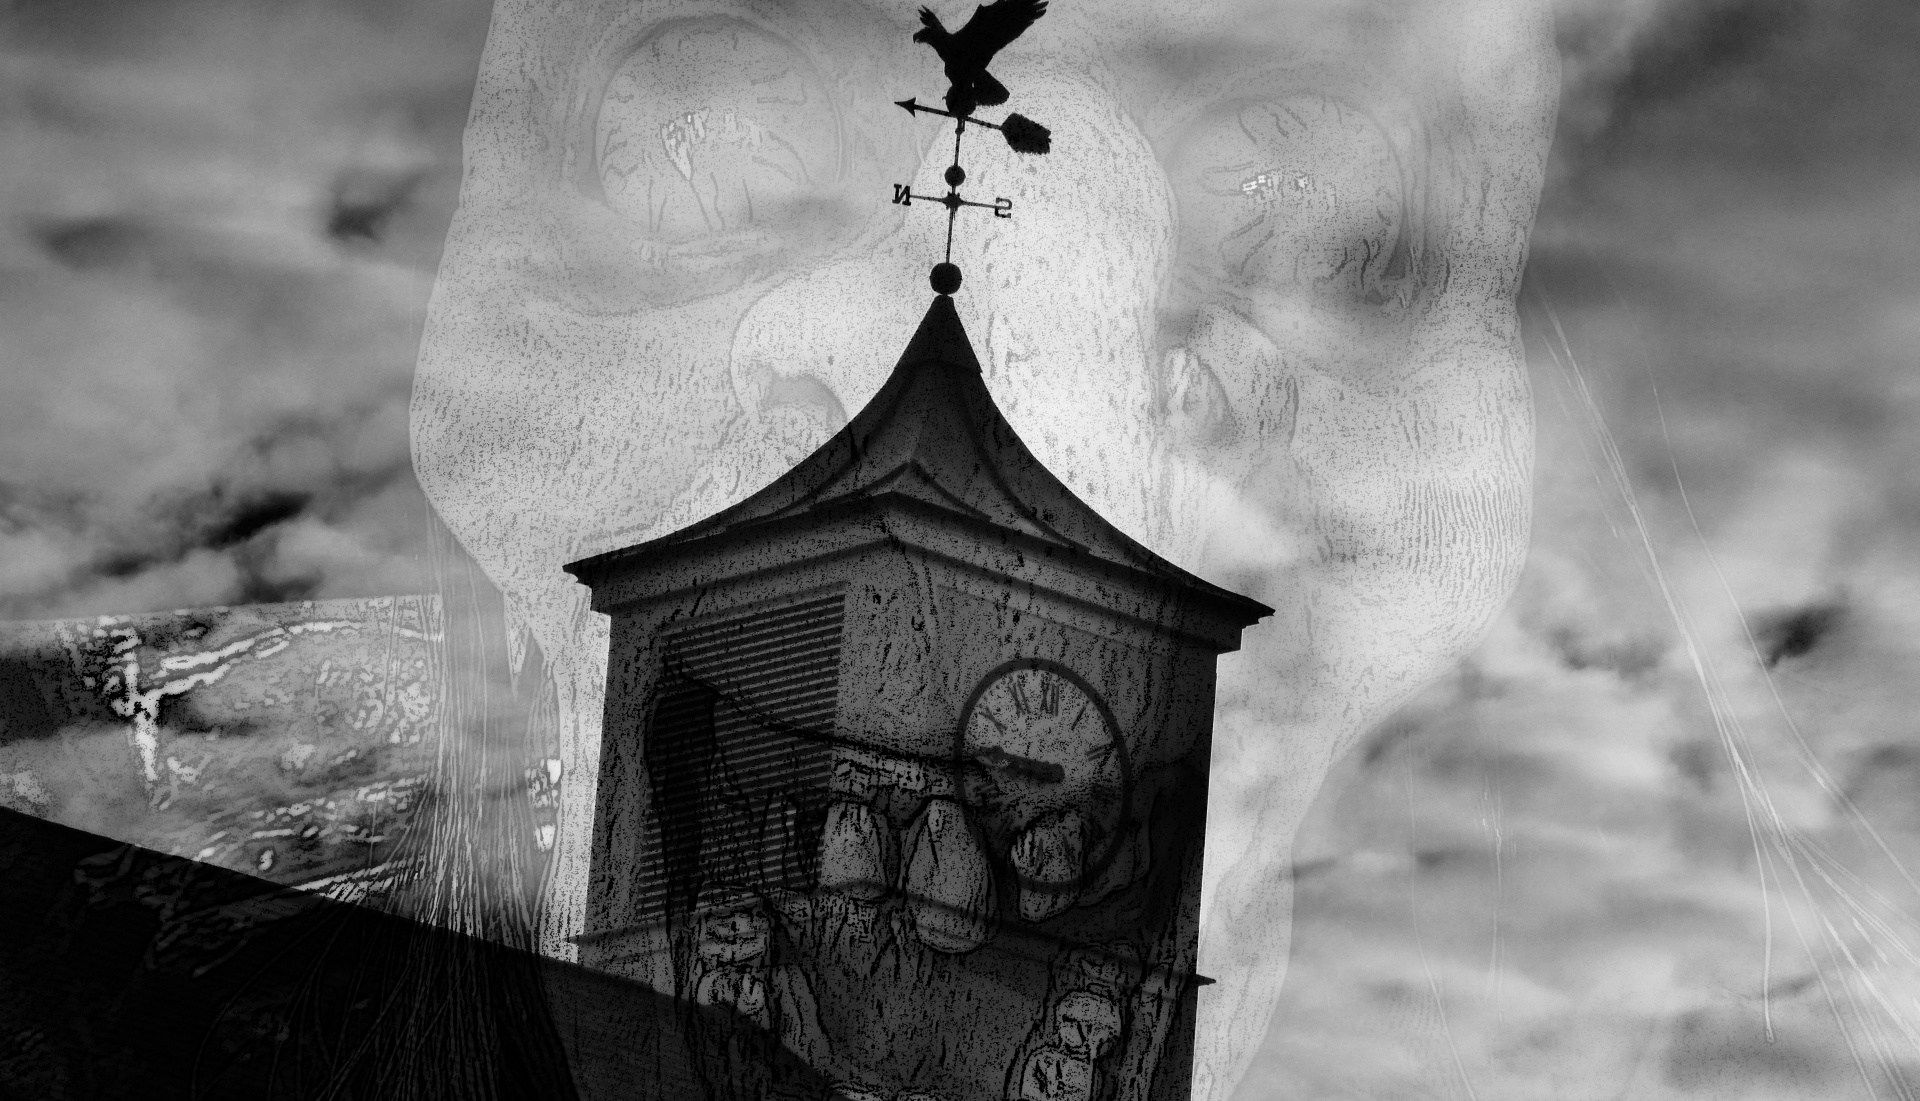 Haunted Clock Tower